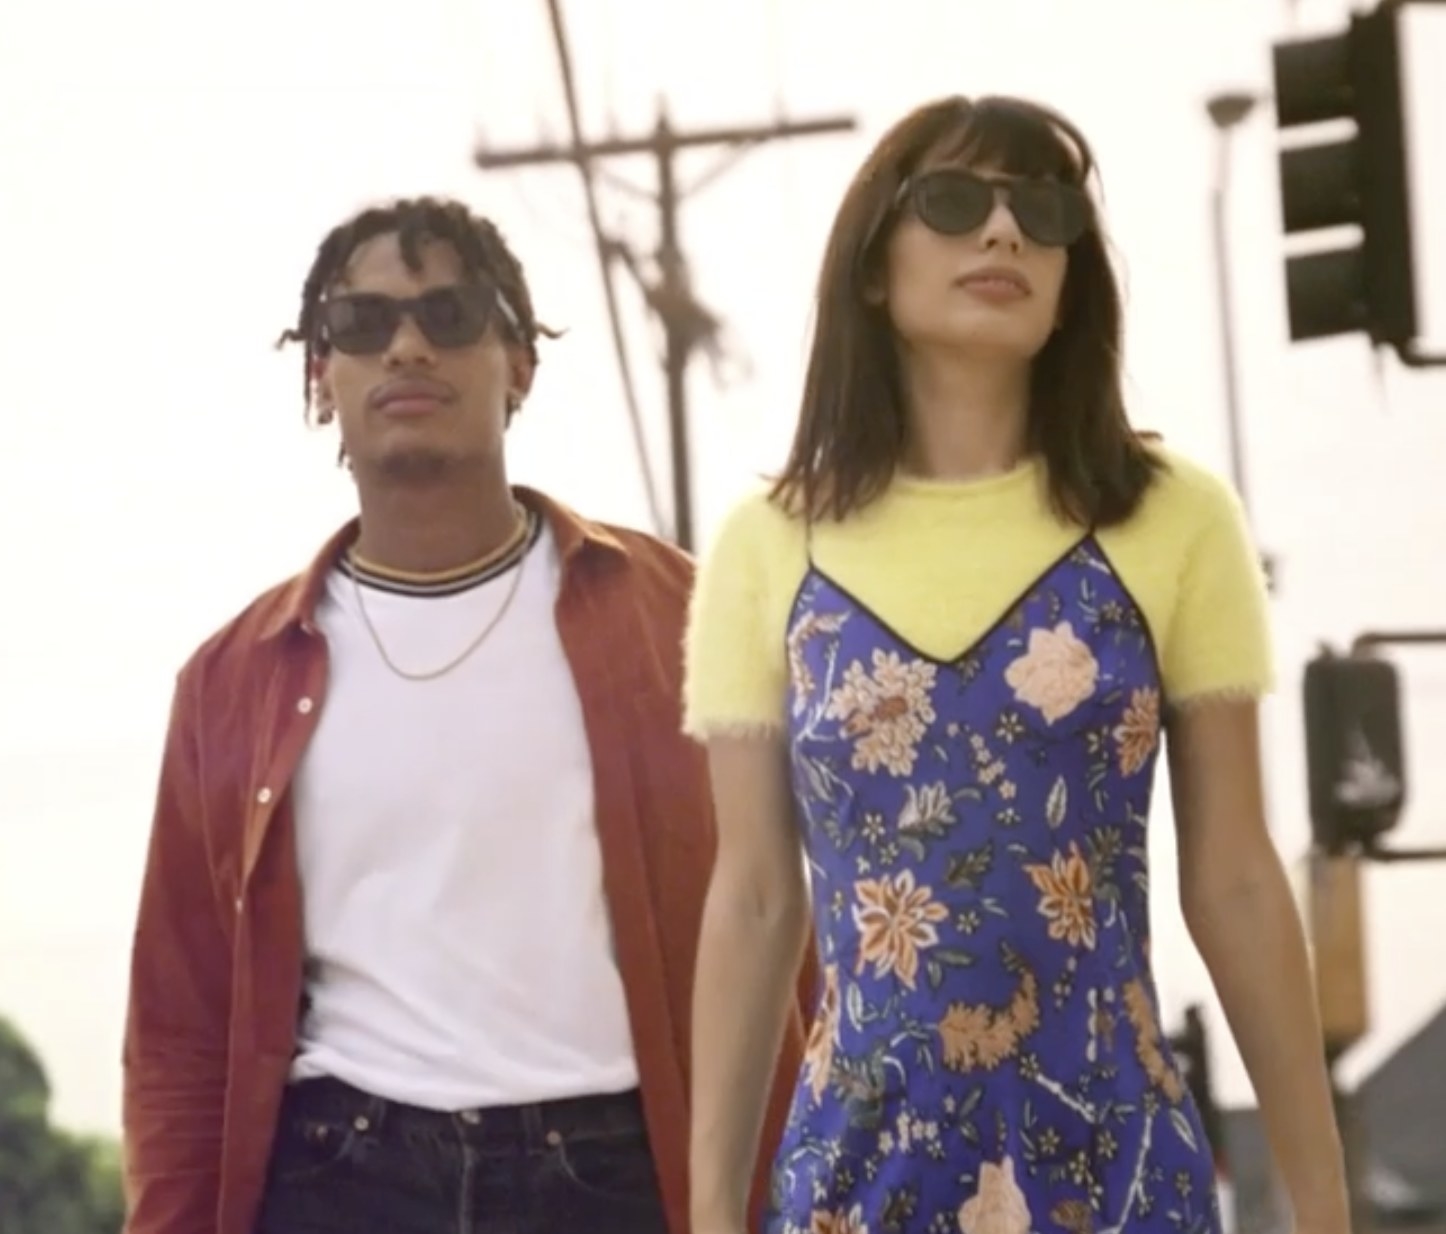 Two models wearing sunglasses